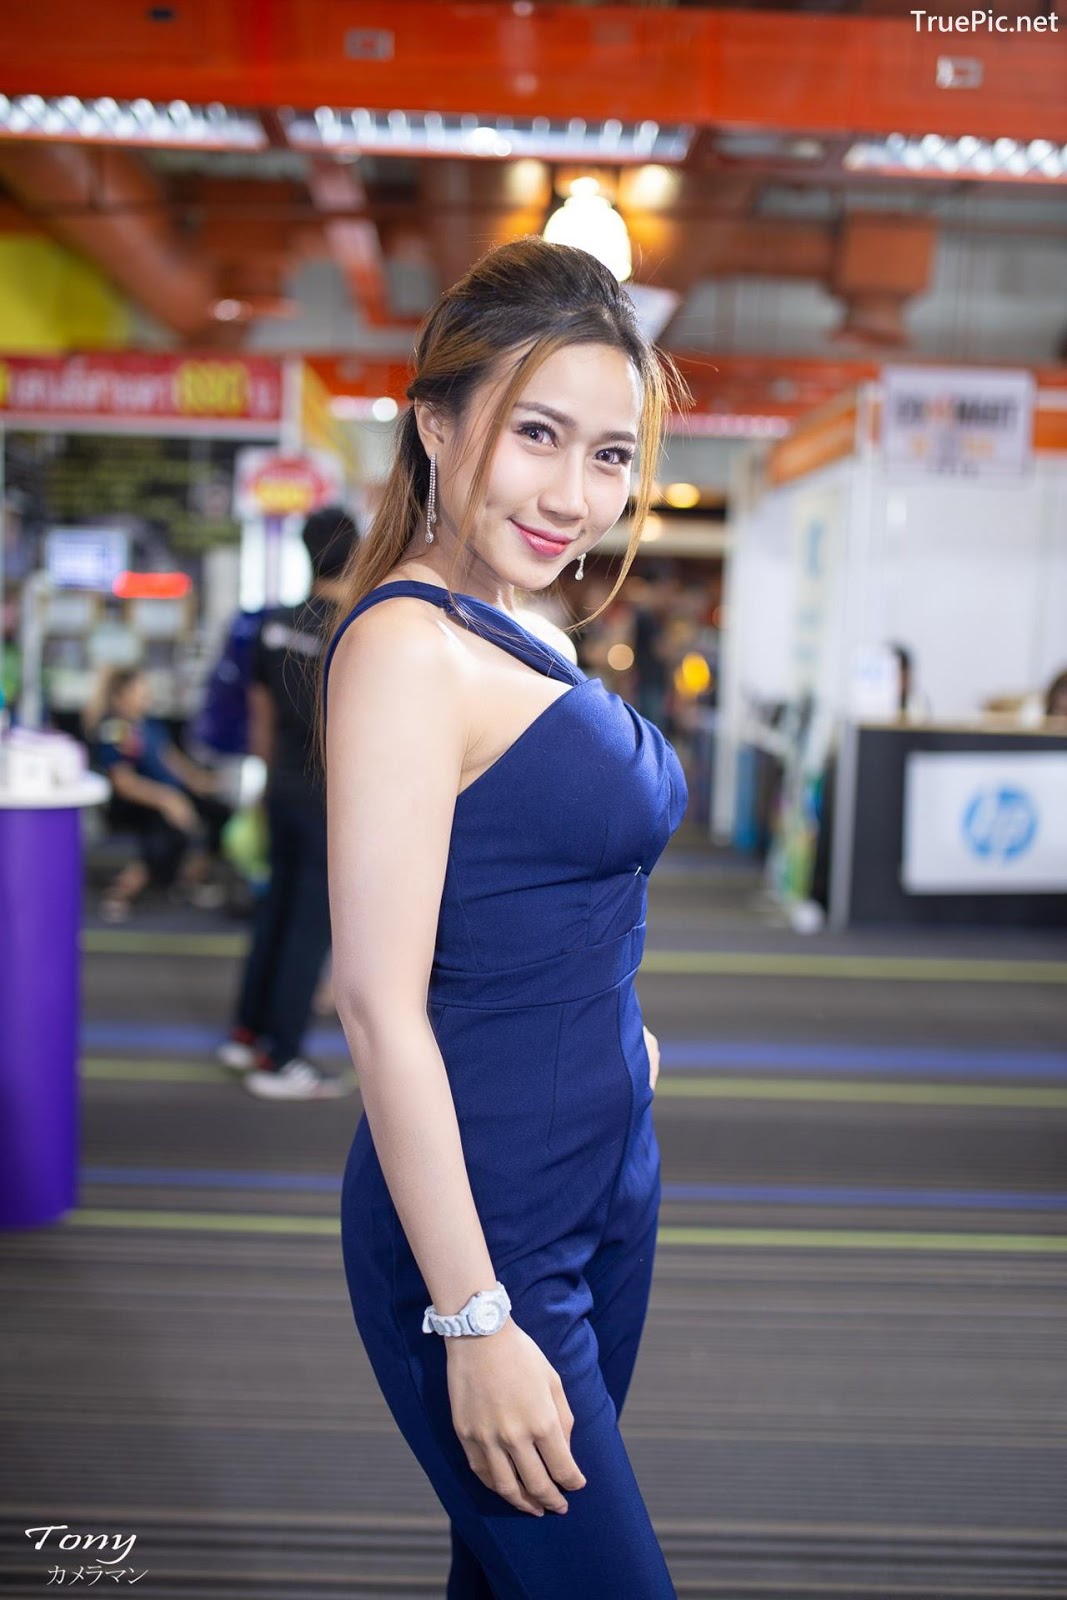 Image-Thailand-Hot-Model-Thai-PG-At-Commart-2018-TruePic.net- Picture-14